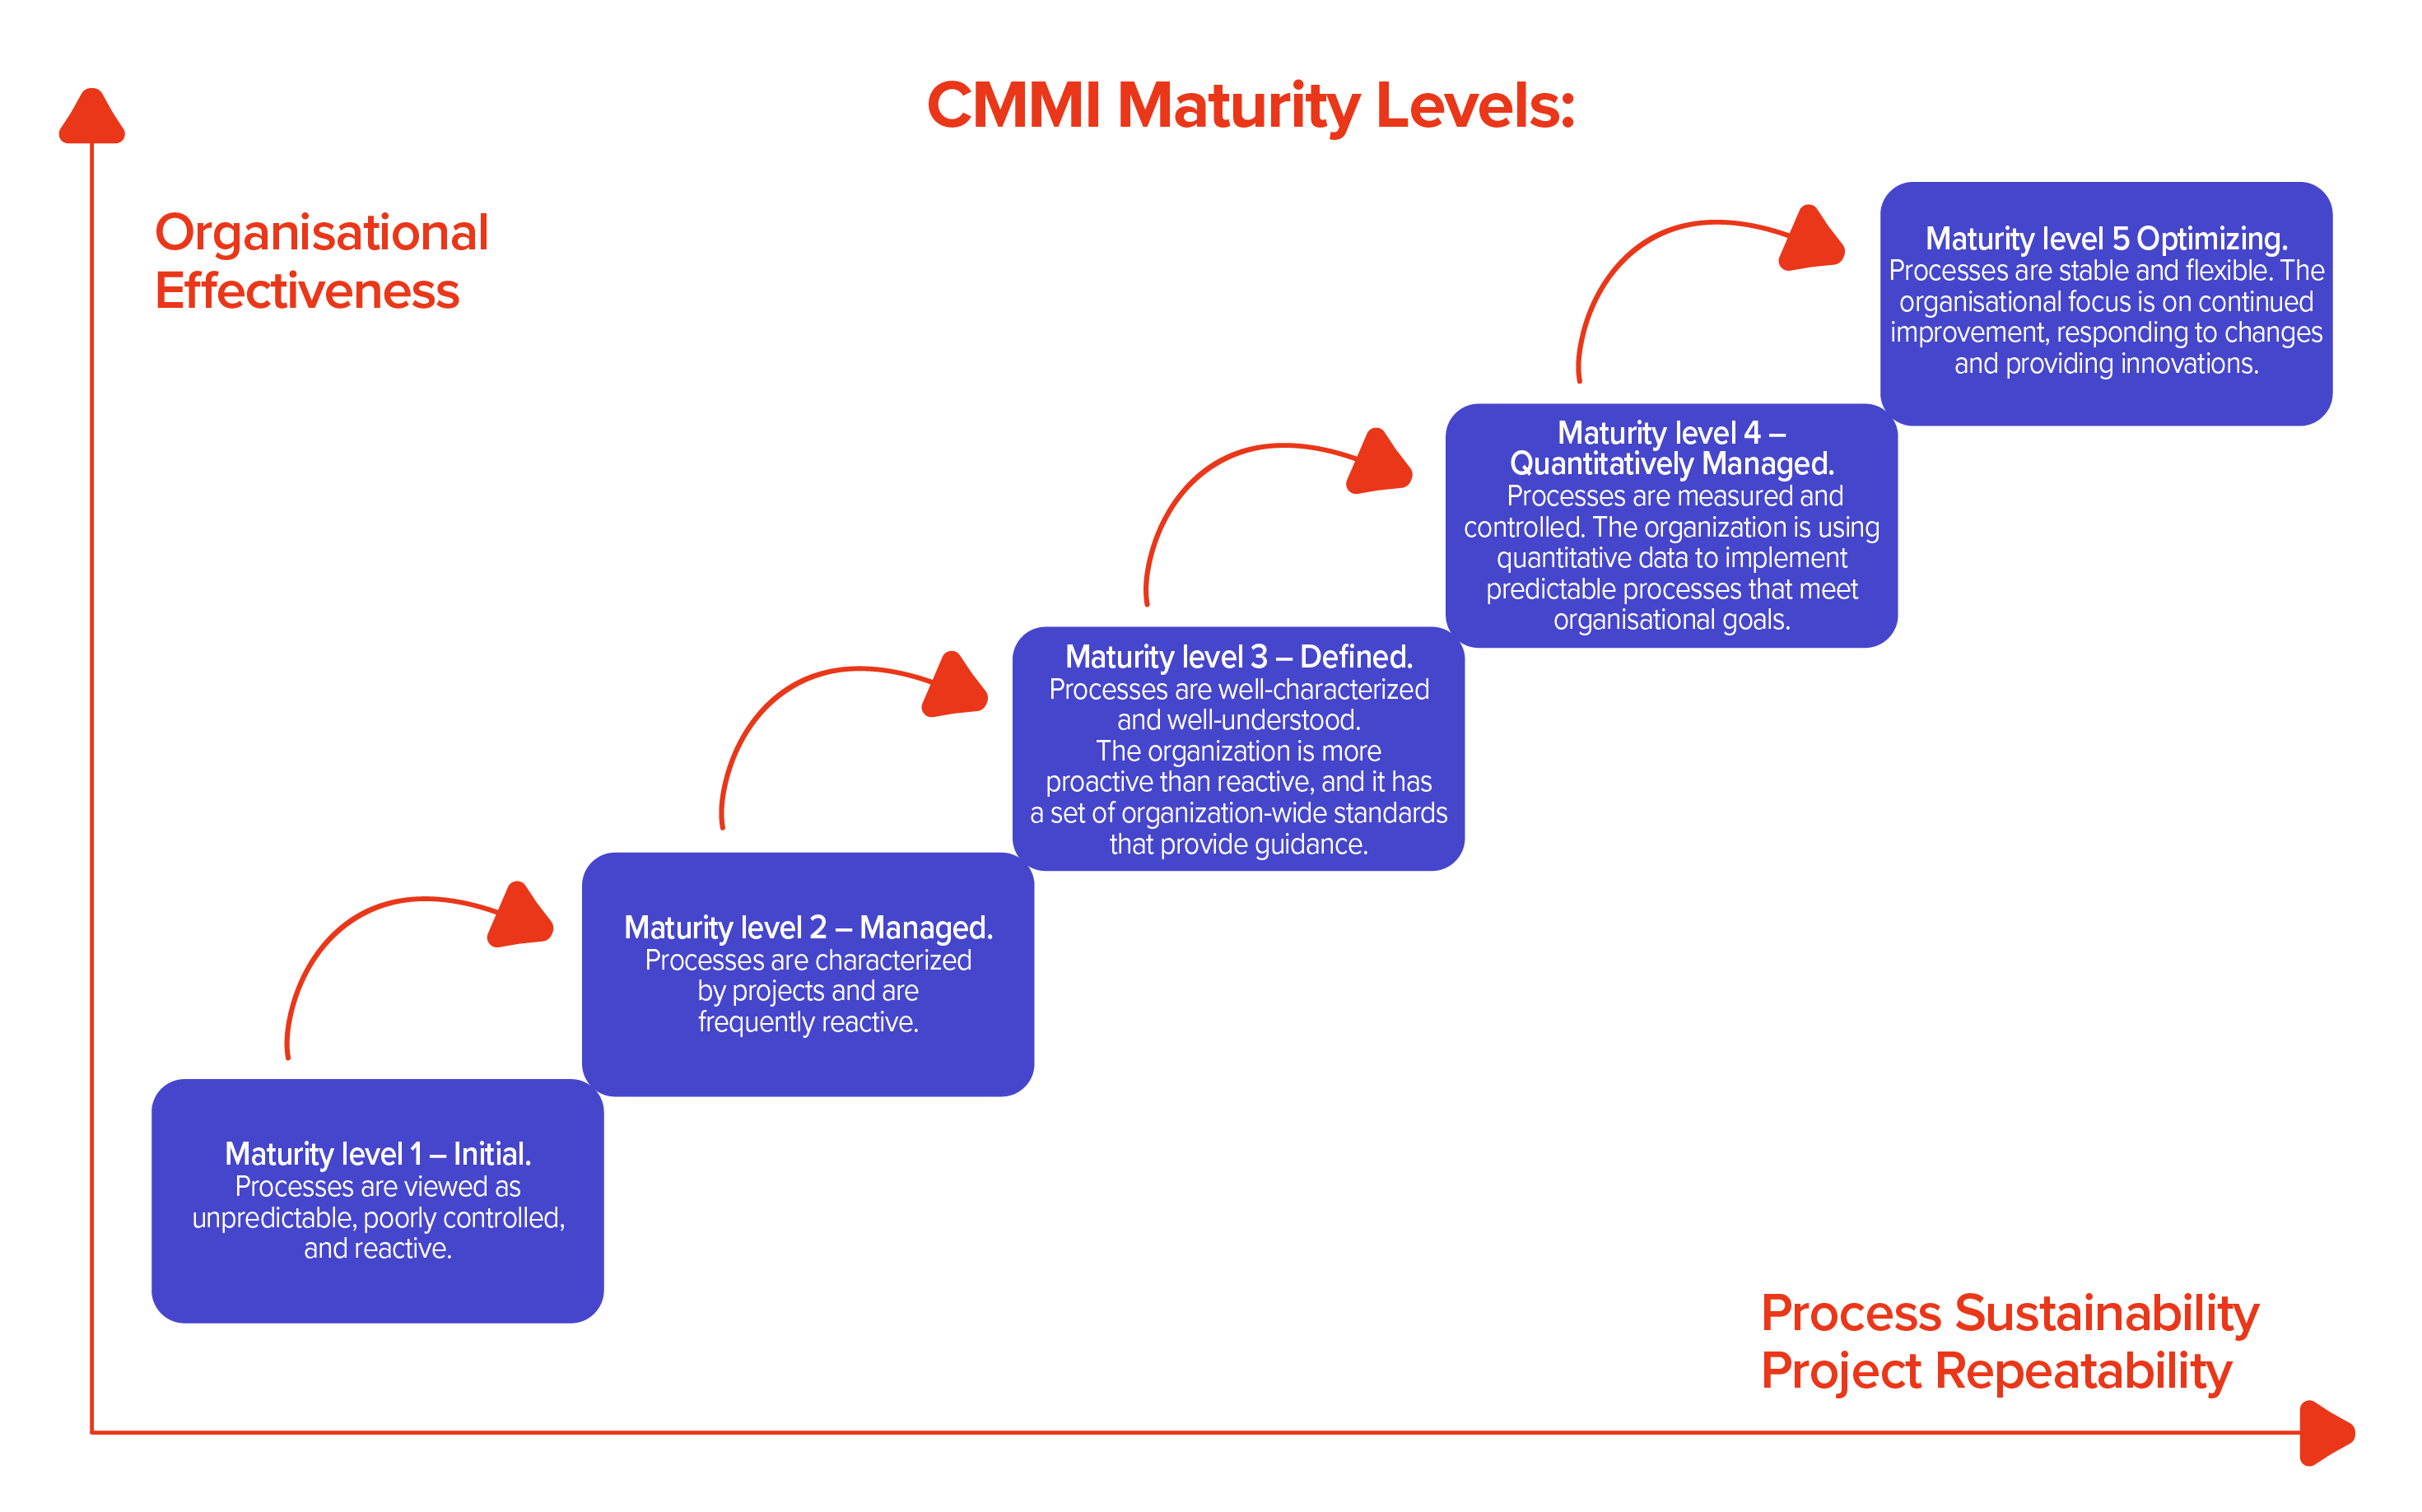 CMMI maturity levels